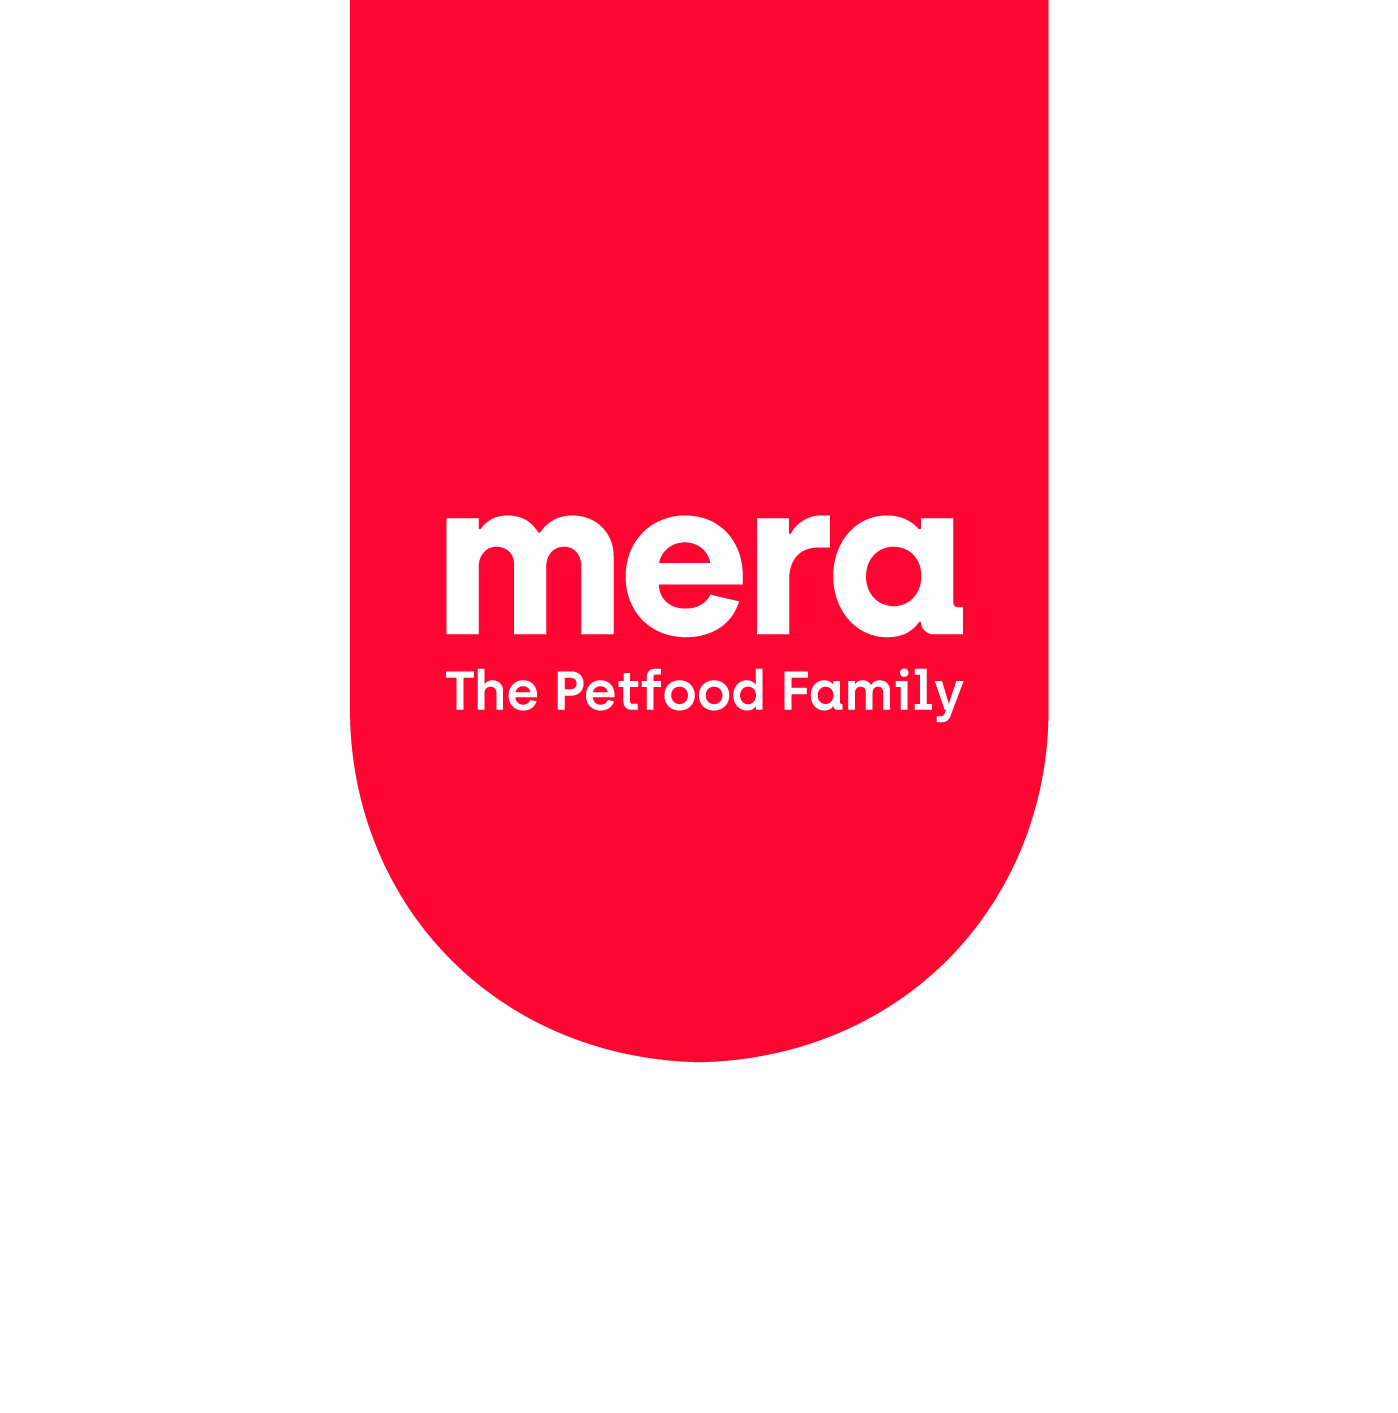 mera - The Petfood Family